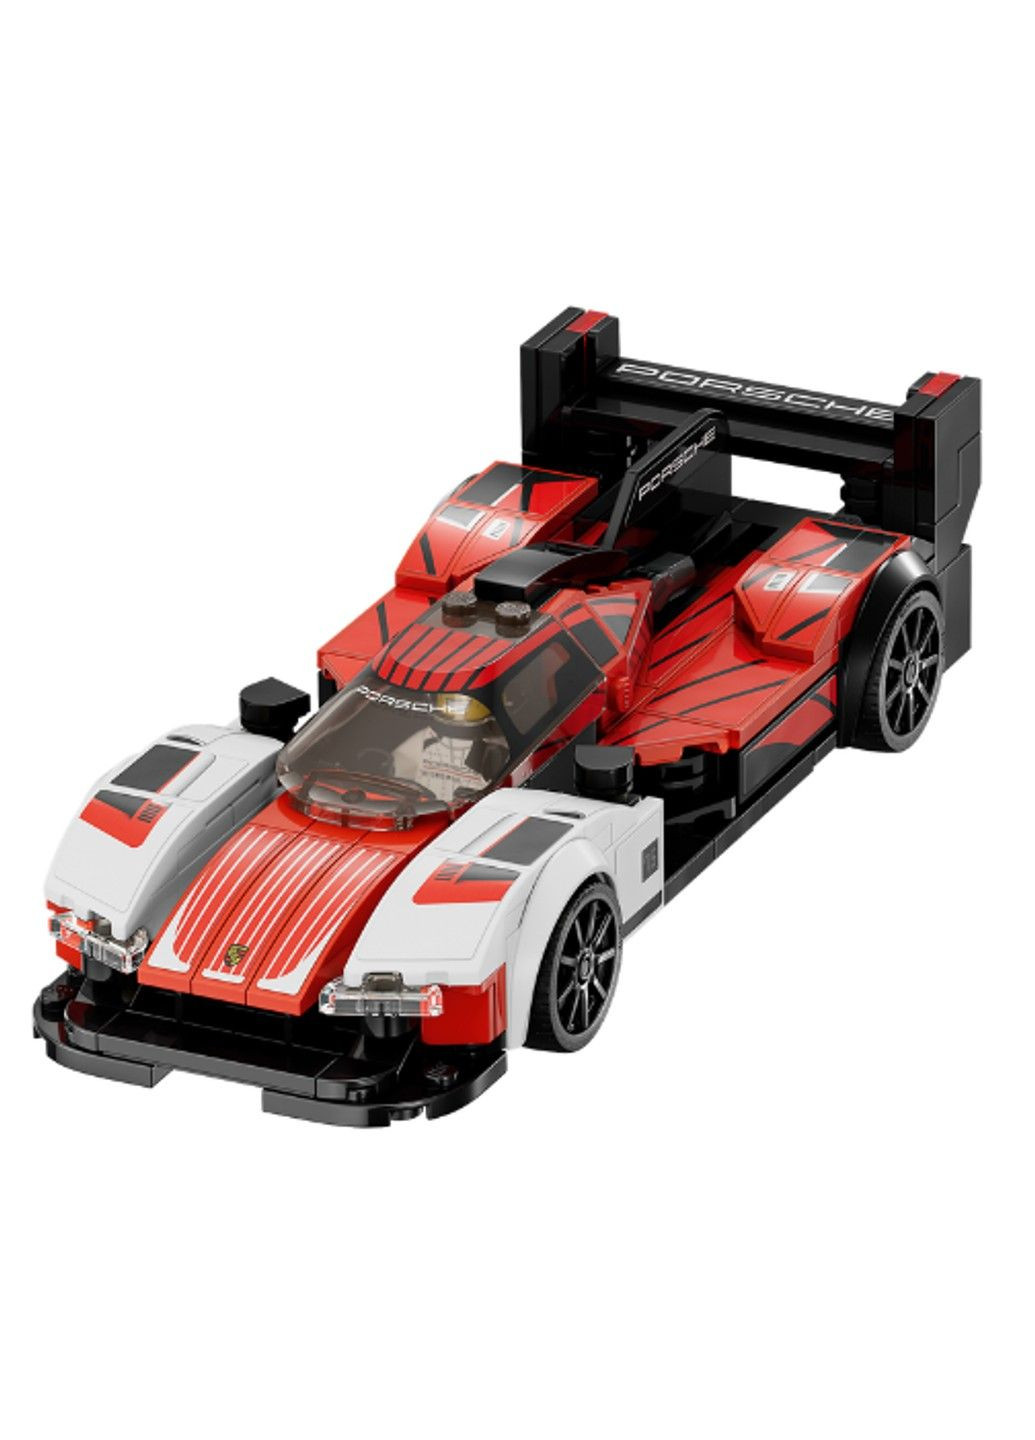 Конструктор Speed Champions Porsche 963 280 деталей (76916) Lego (285119807)